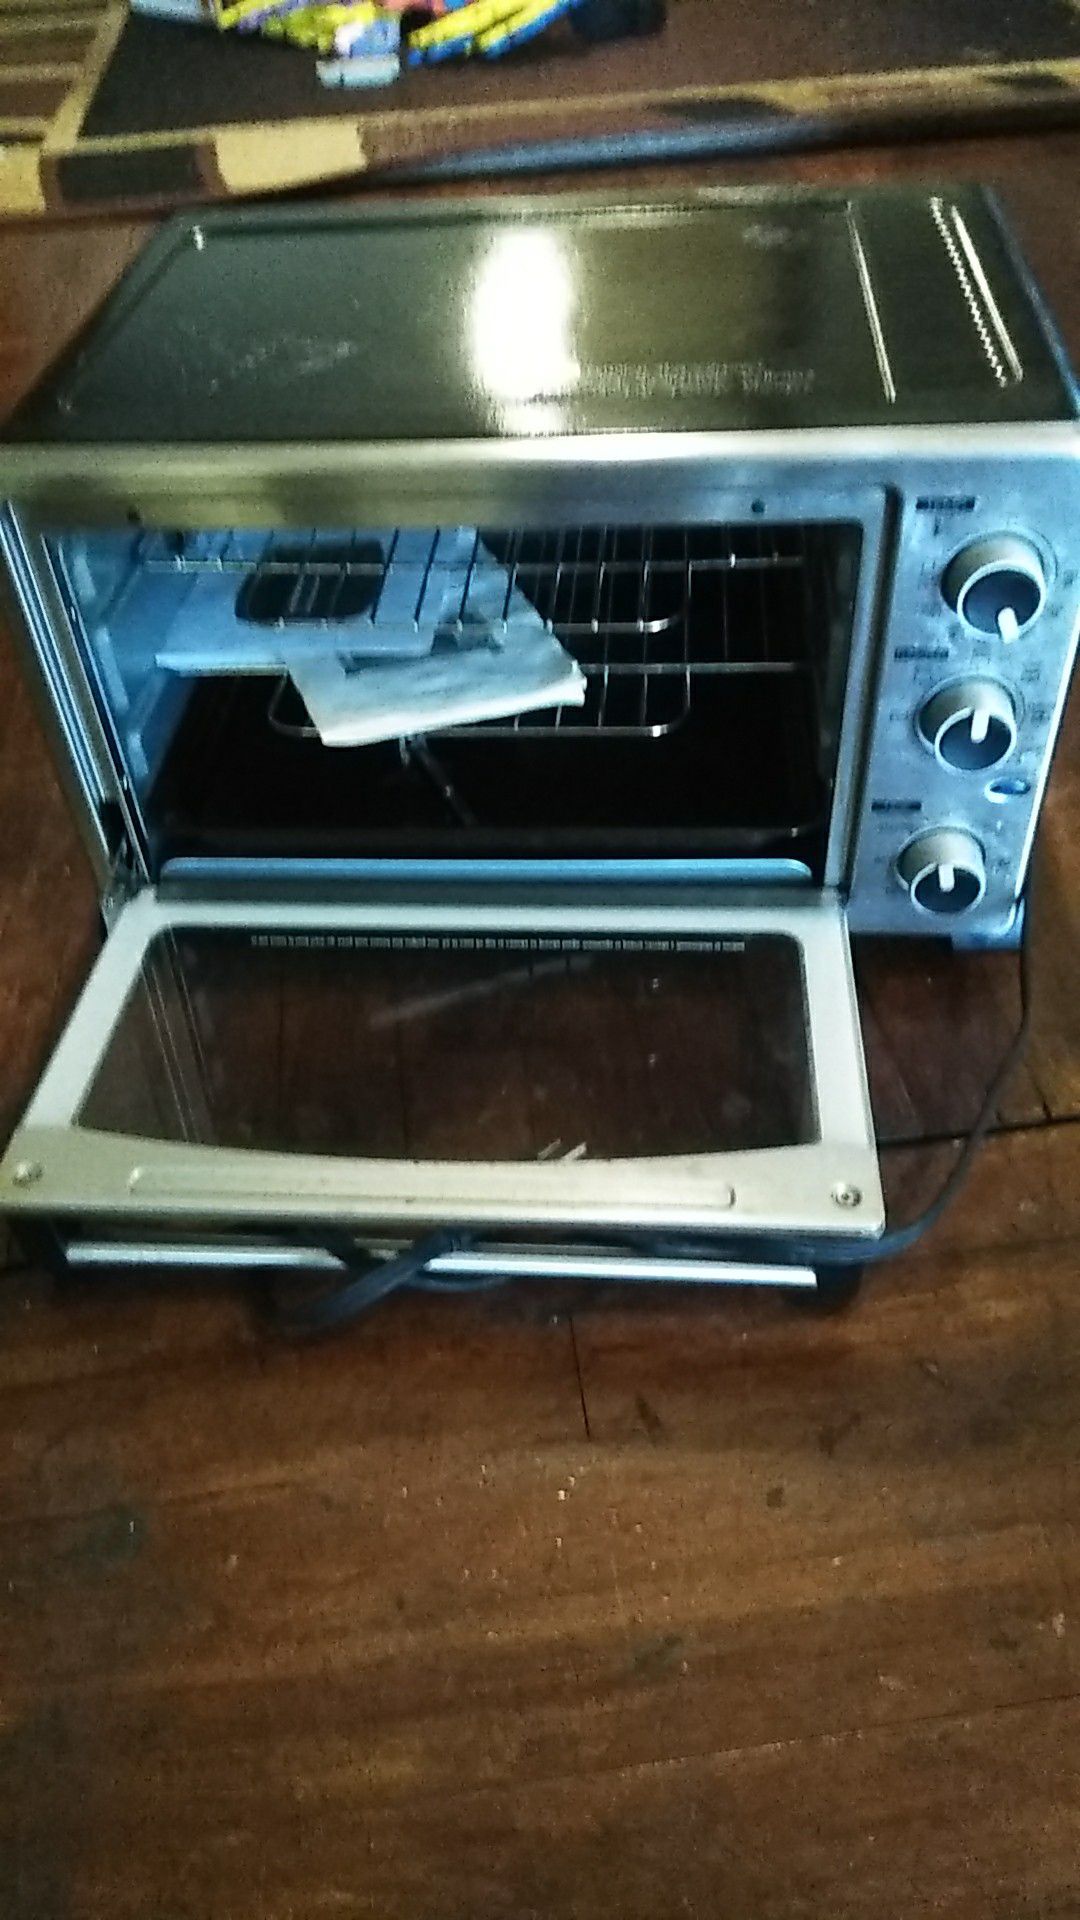 Farberware 5 function toaster oven